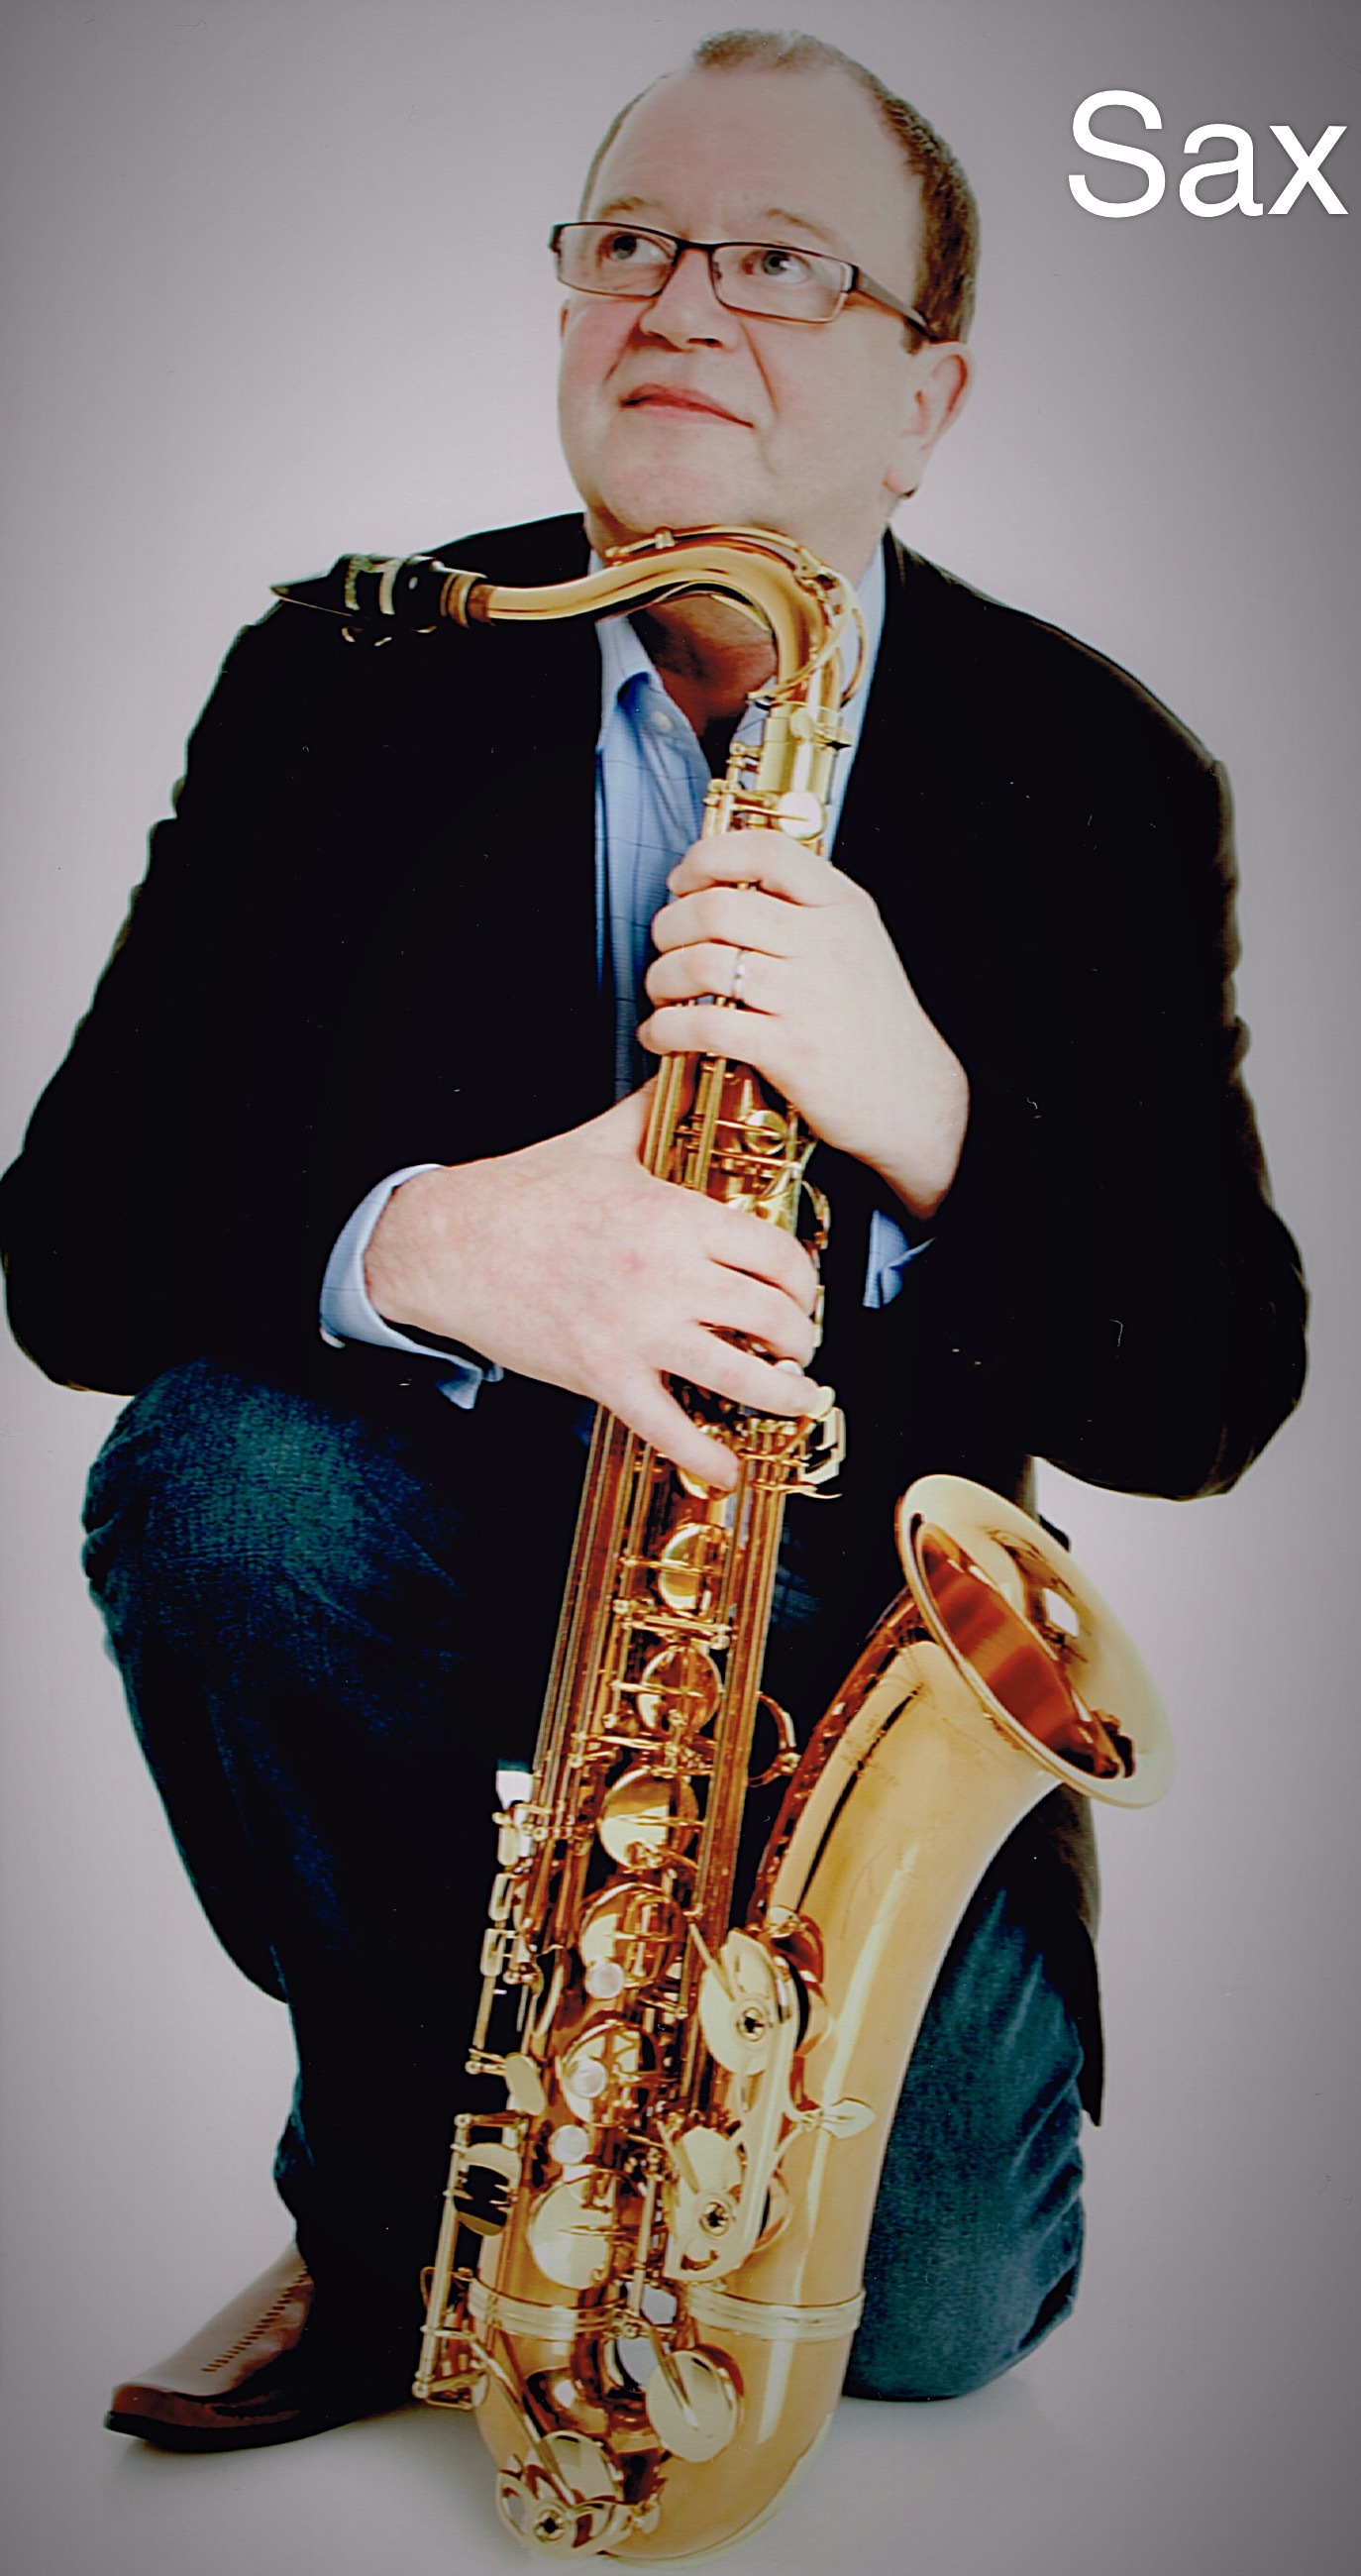 Saxophonist Ken in Maryport, Cumbria